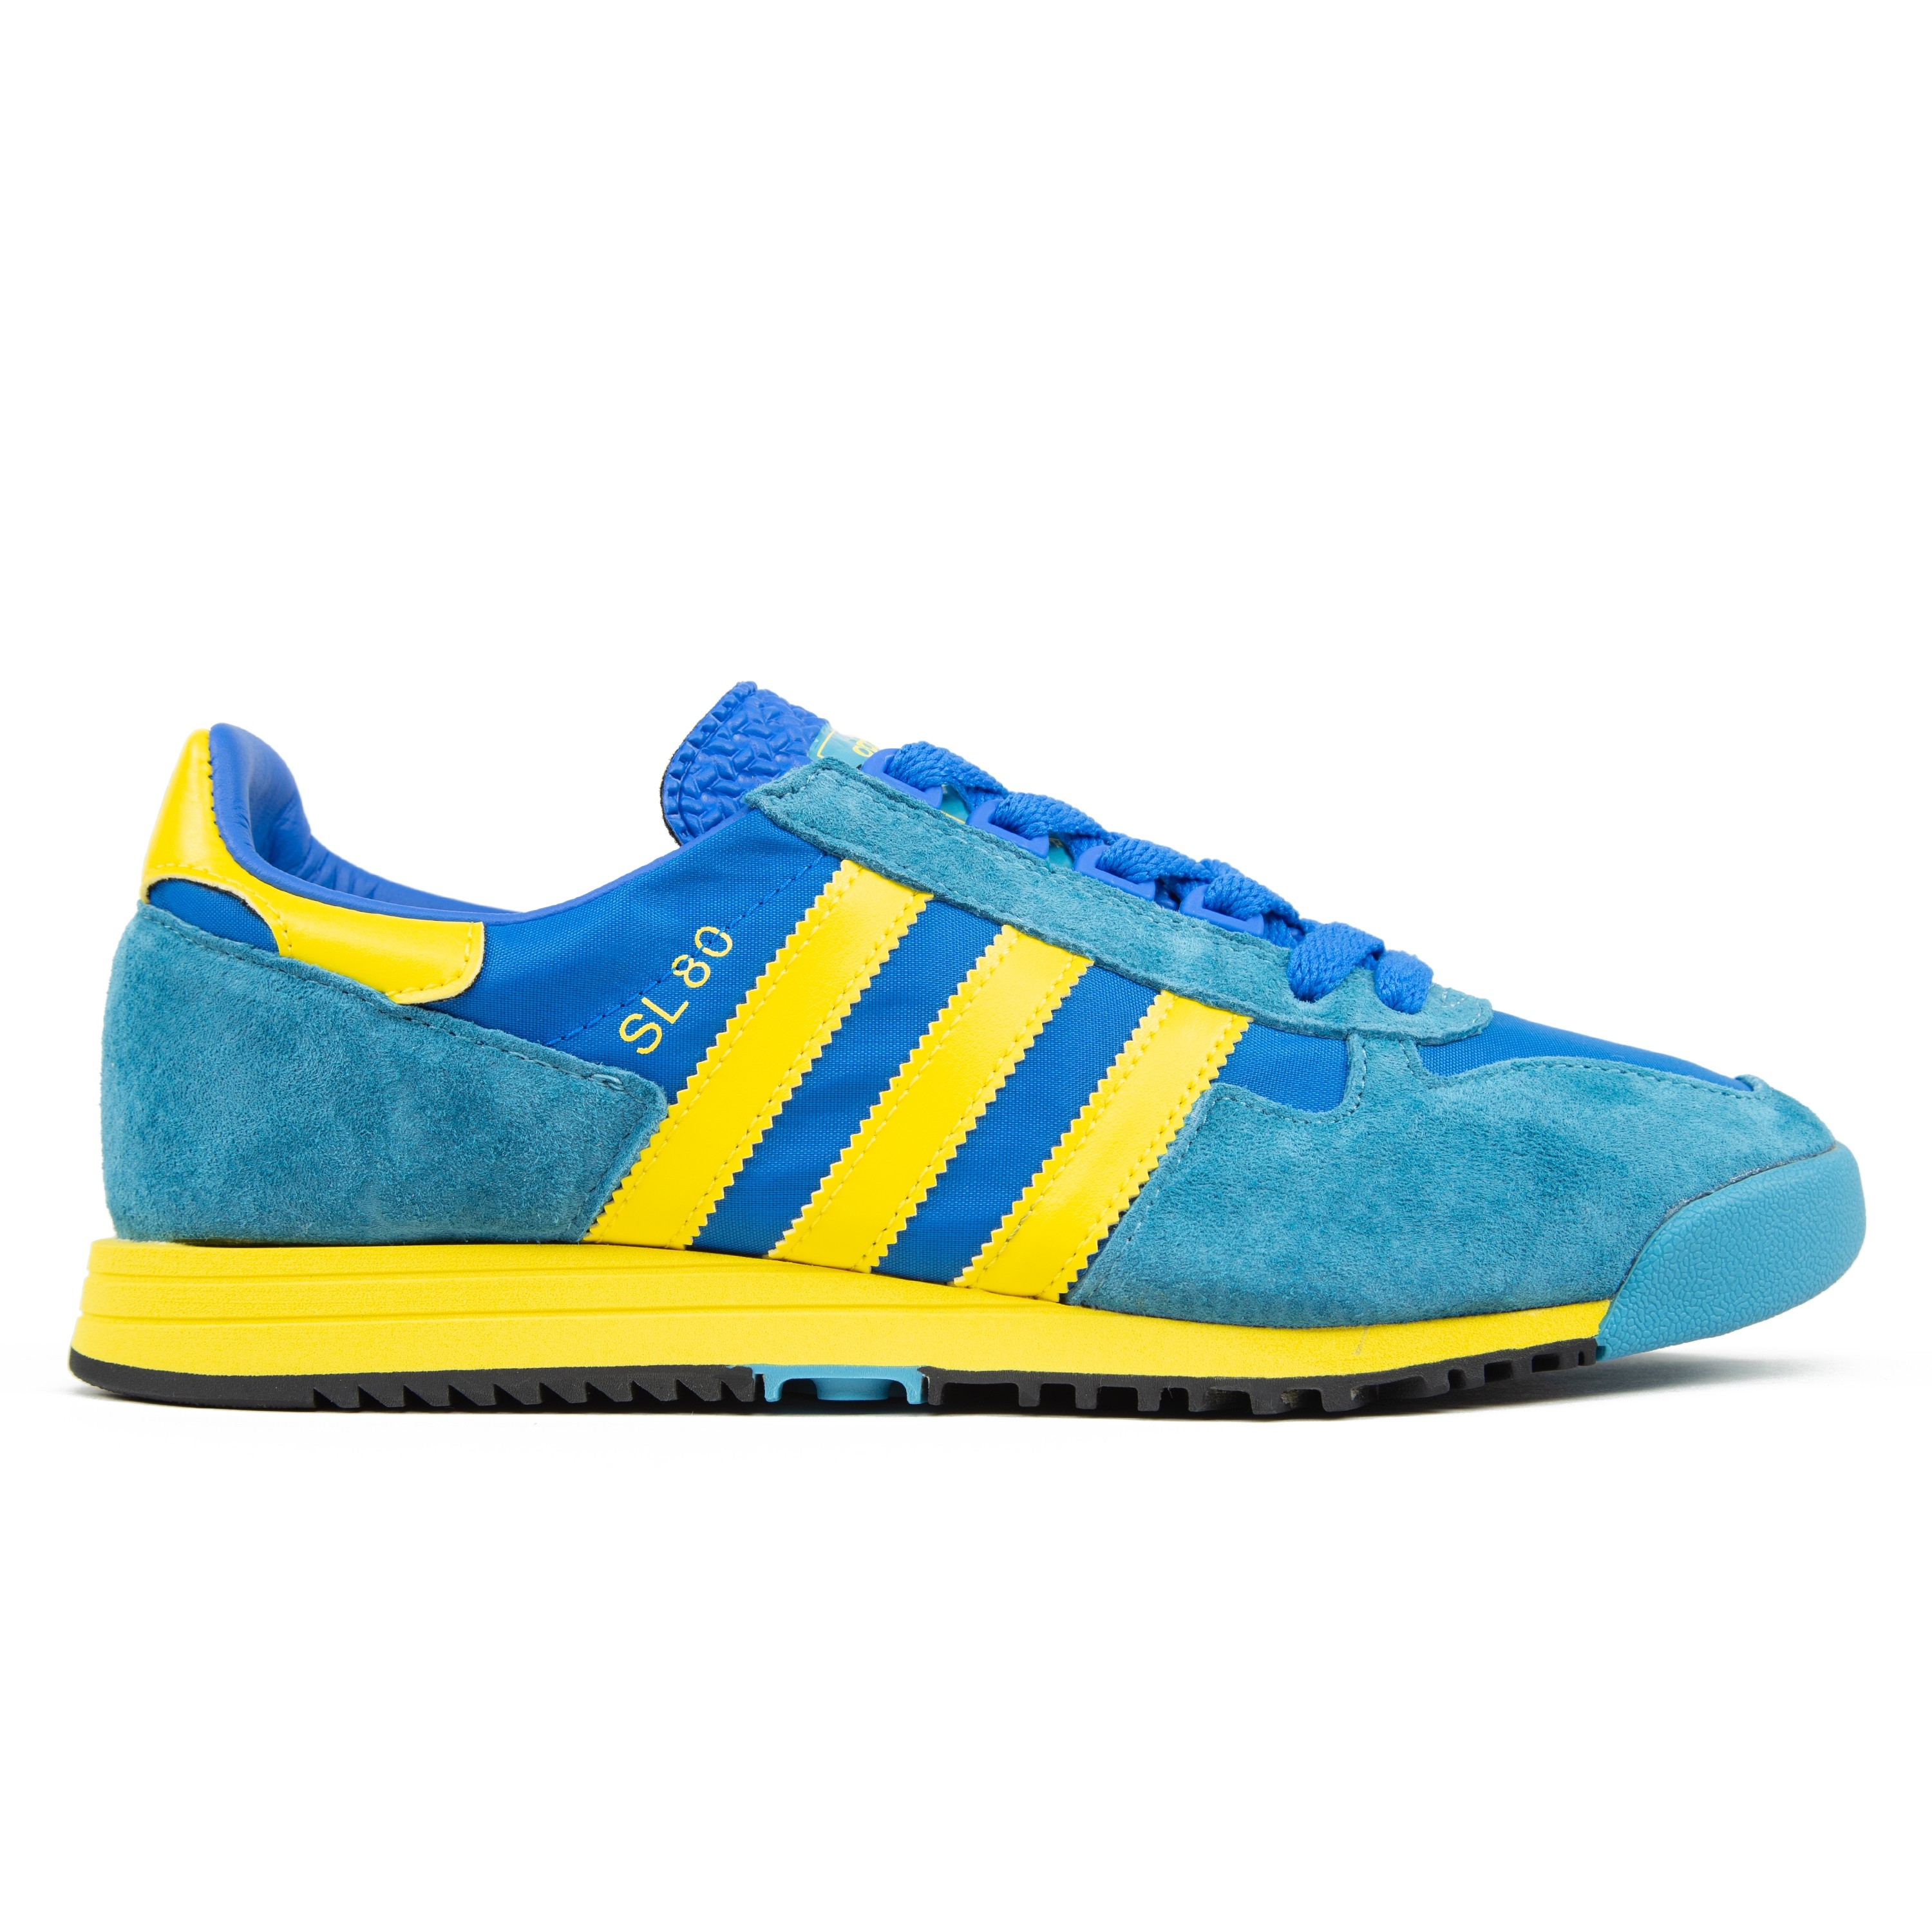 adidas sl 80 blue and yellow